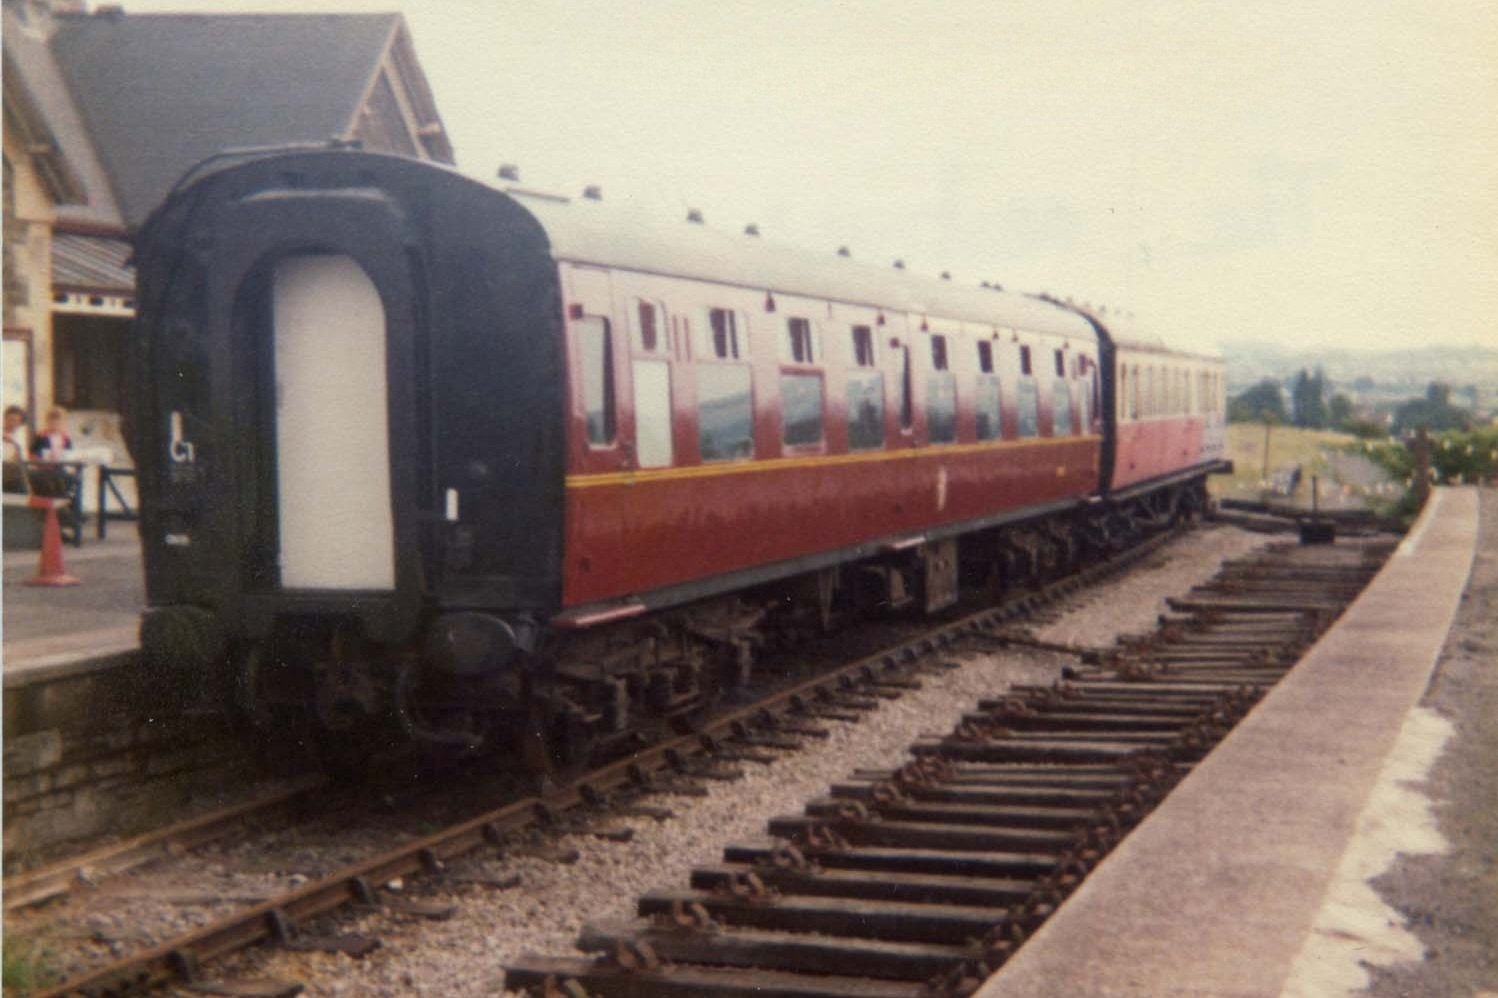  CK 15447 sitting in the platform at Bitton Station on 30 August 1980. (C) C Frid 